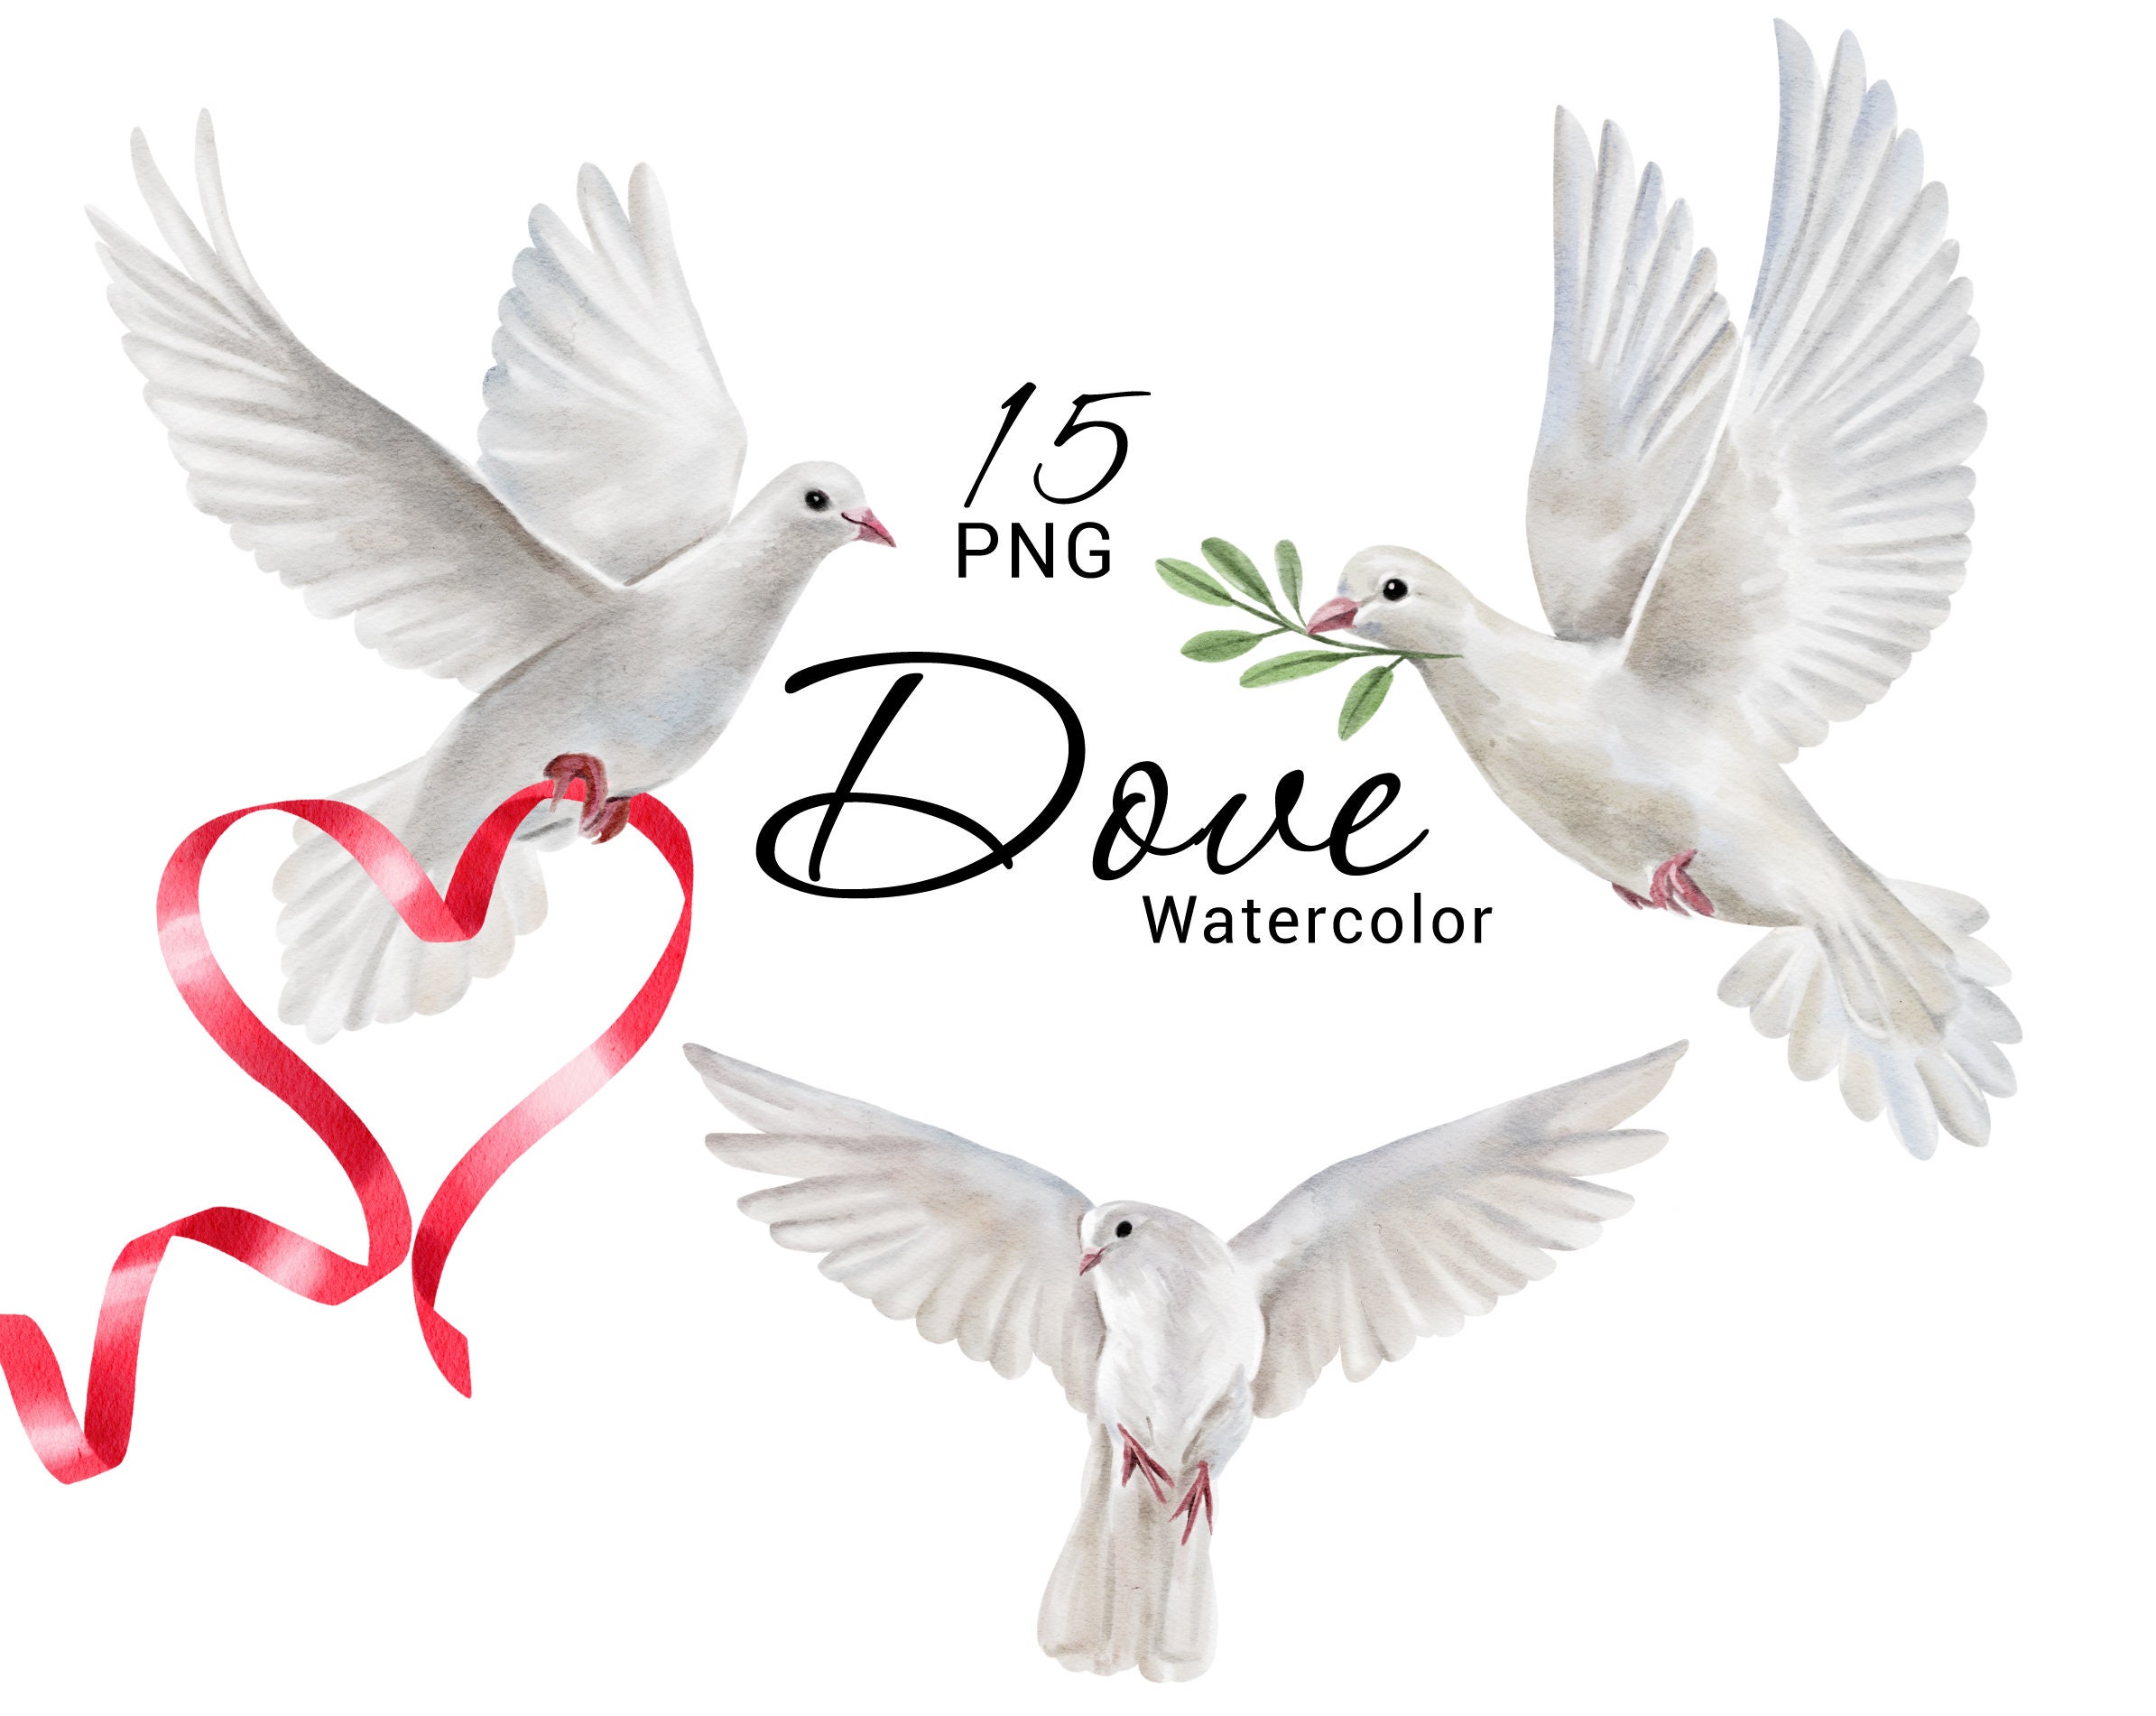 In loving memory memorial dove personalized wax seal stamp